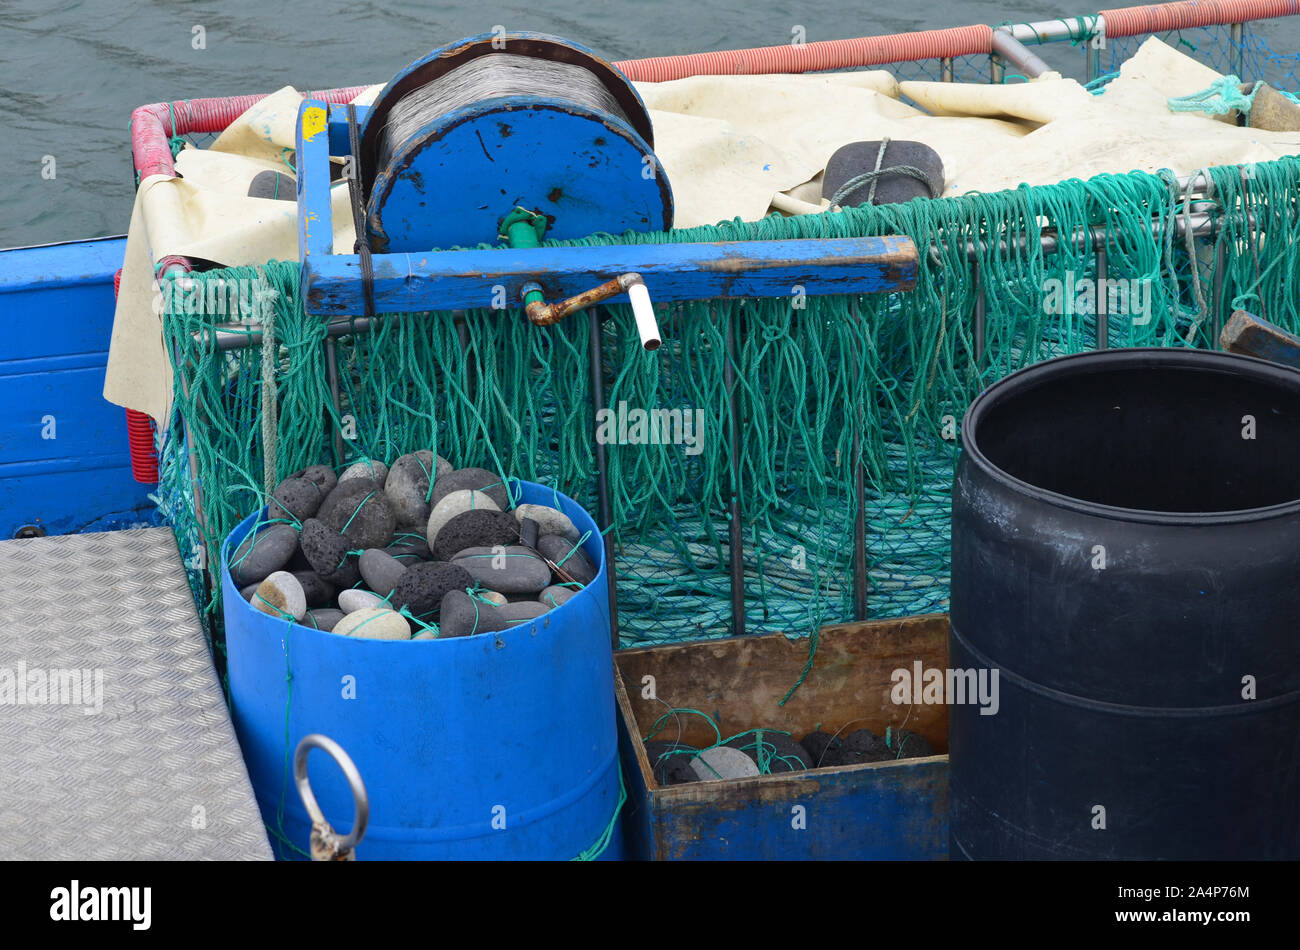 https://c8.alamy.com/comp/2A4P76M/artisanal-deep-set-handline-fishing-vessels-and-fishing-gear-at-ponta-delgada-harbour-azores-islands-portugal-2A4P76M.jpg